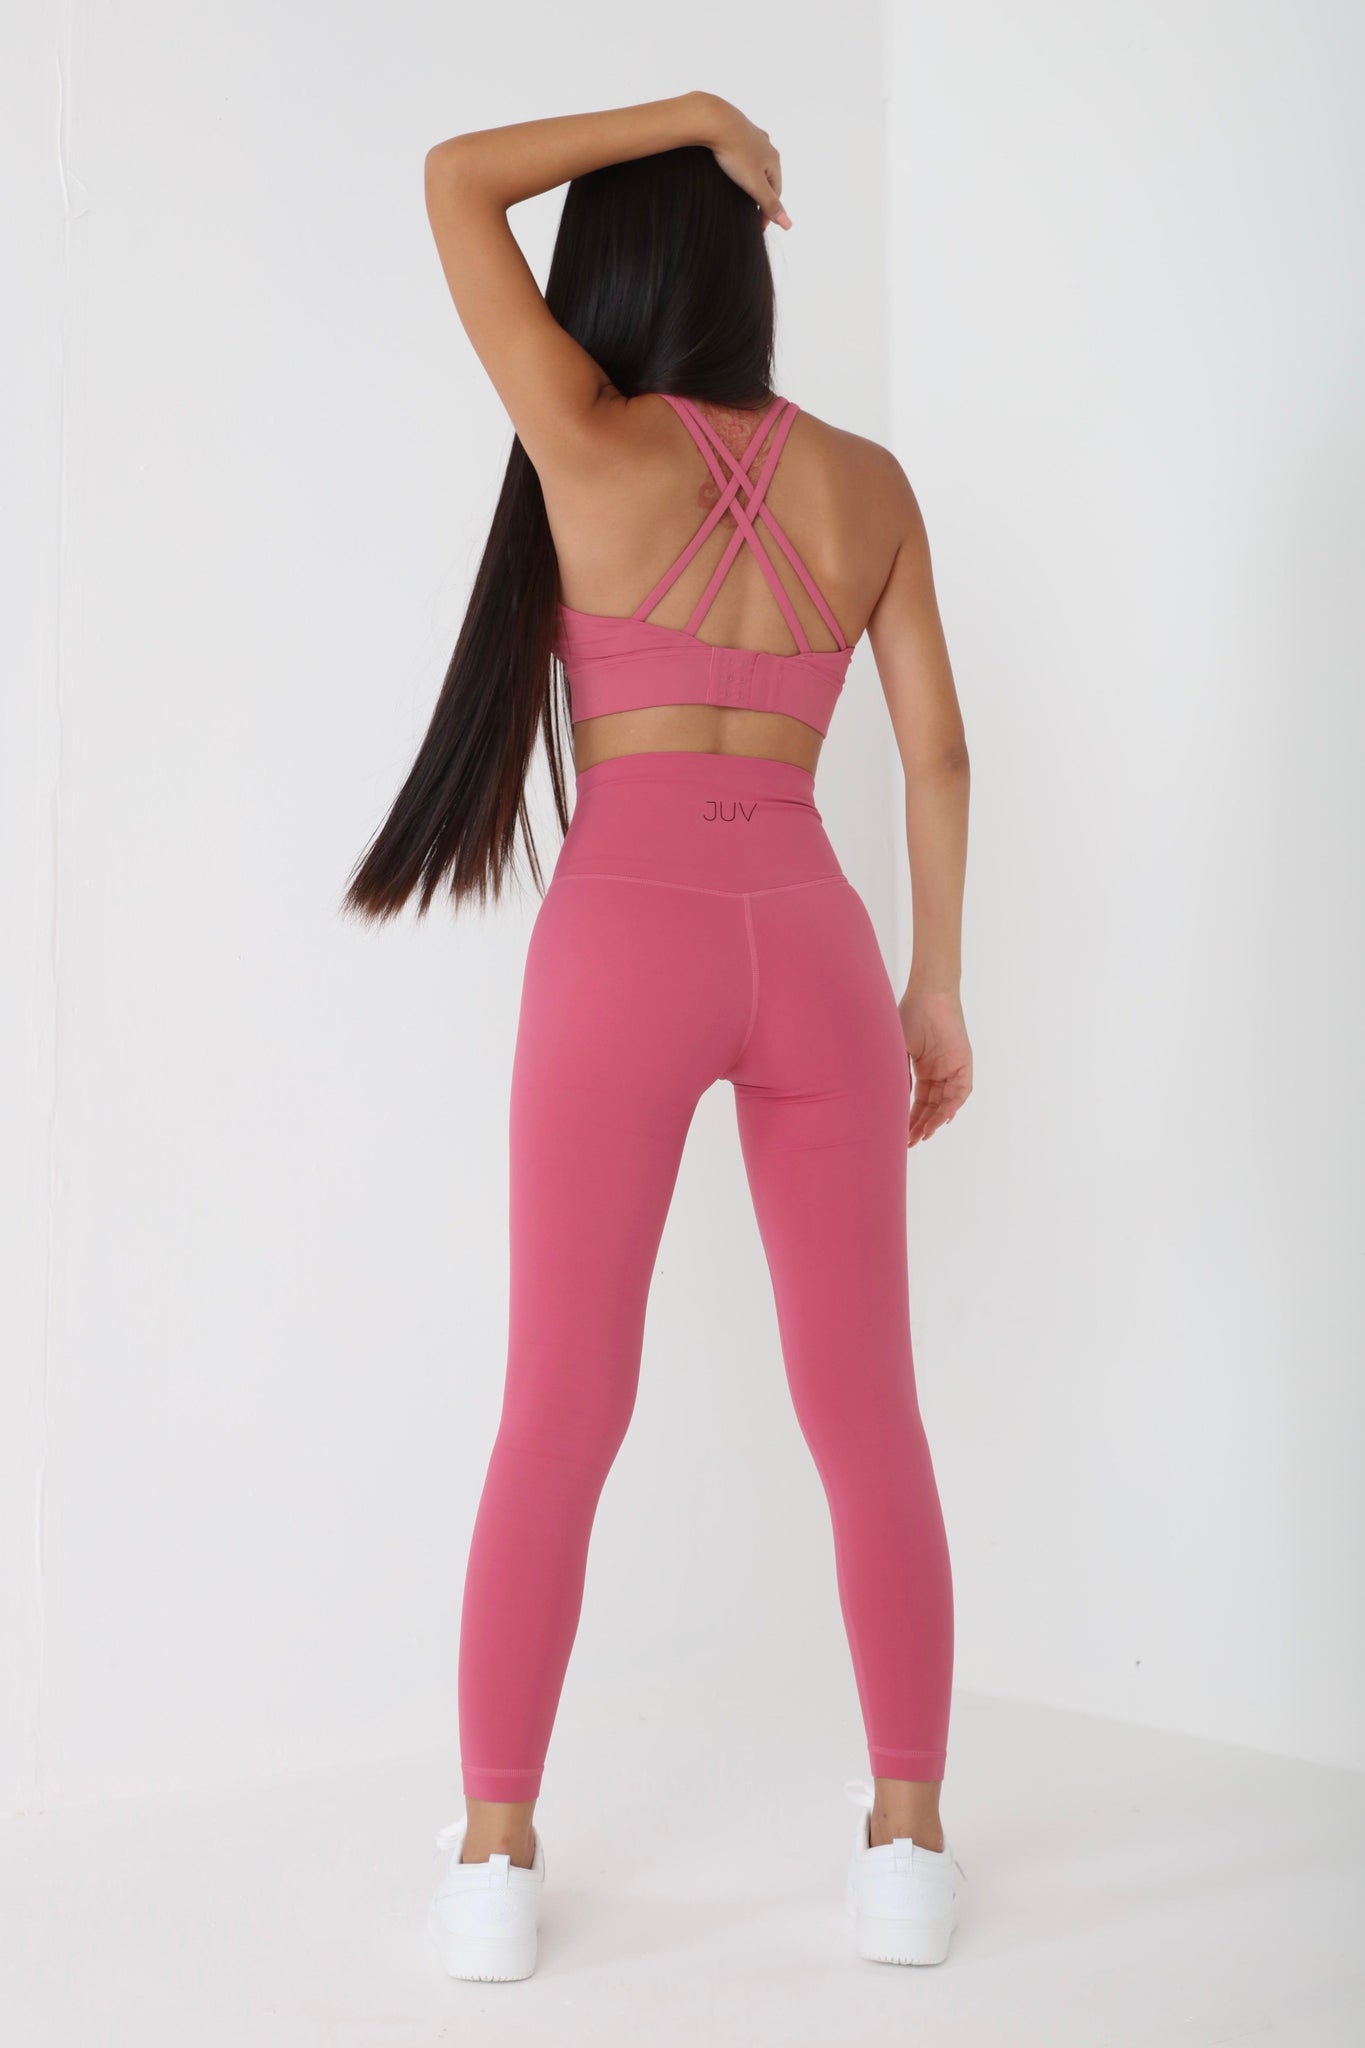 JUV fresh legging in pink color, full body back view.